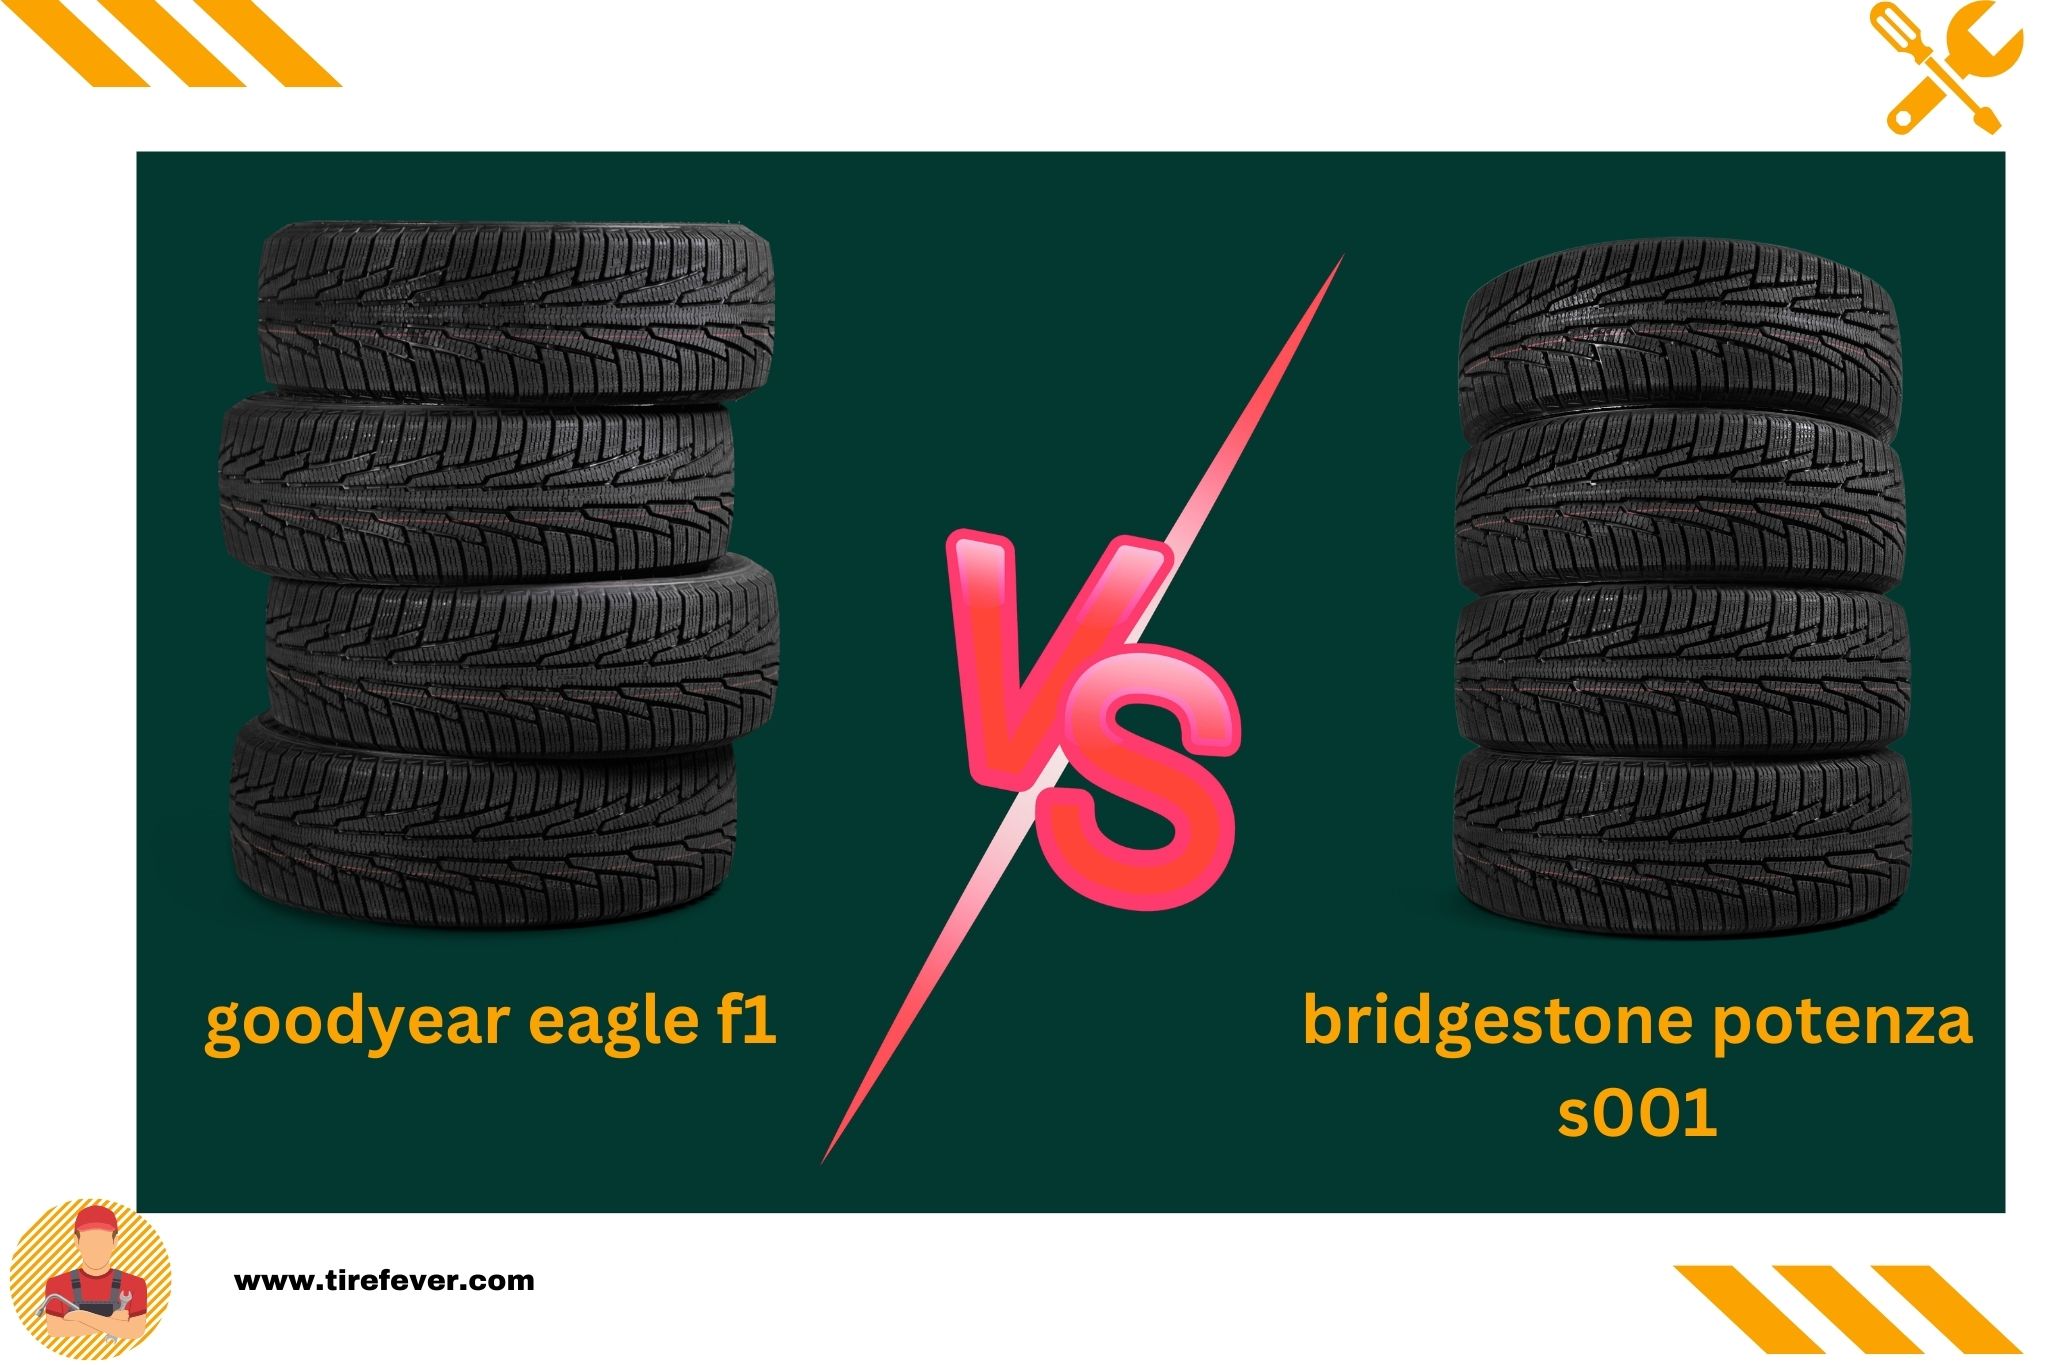 goodyear eagle f1 vs bridgestone potenza s001